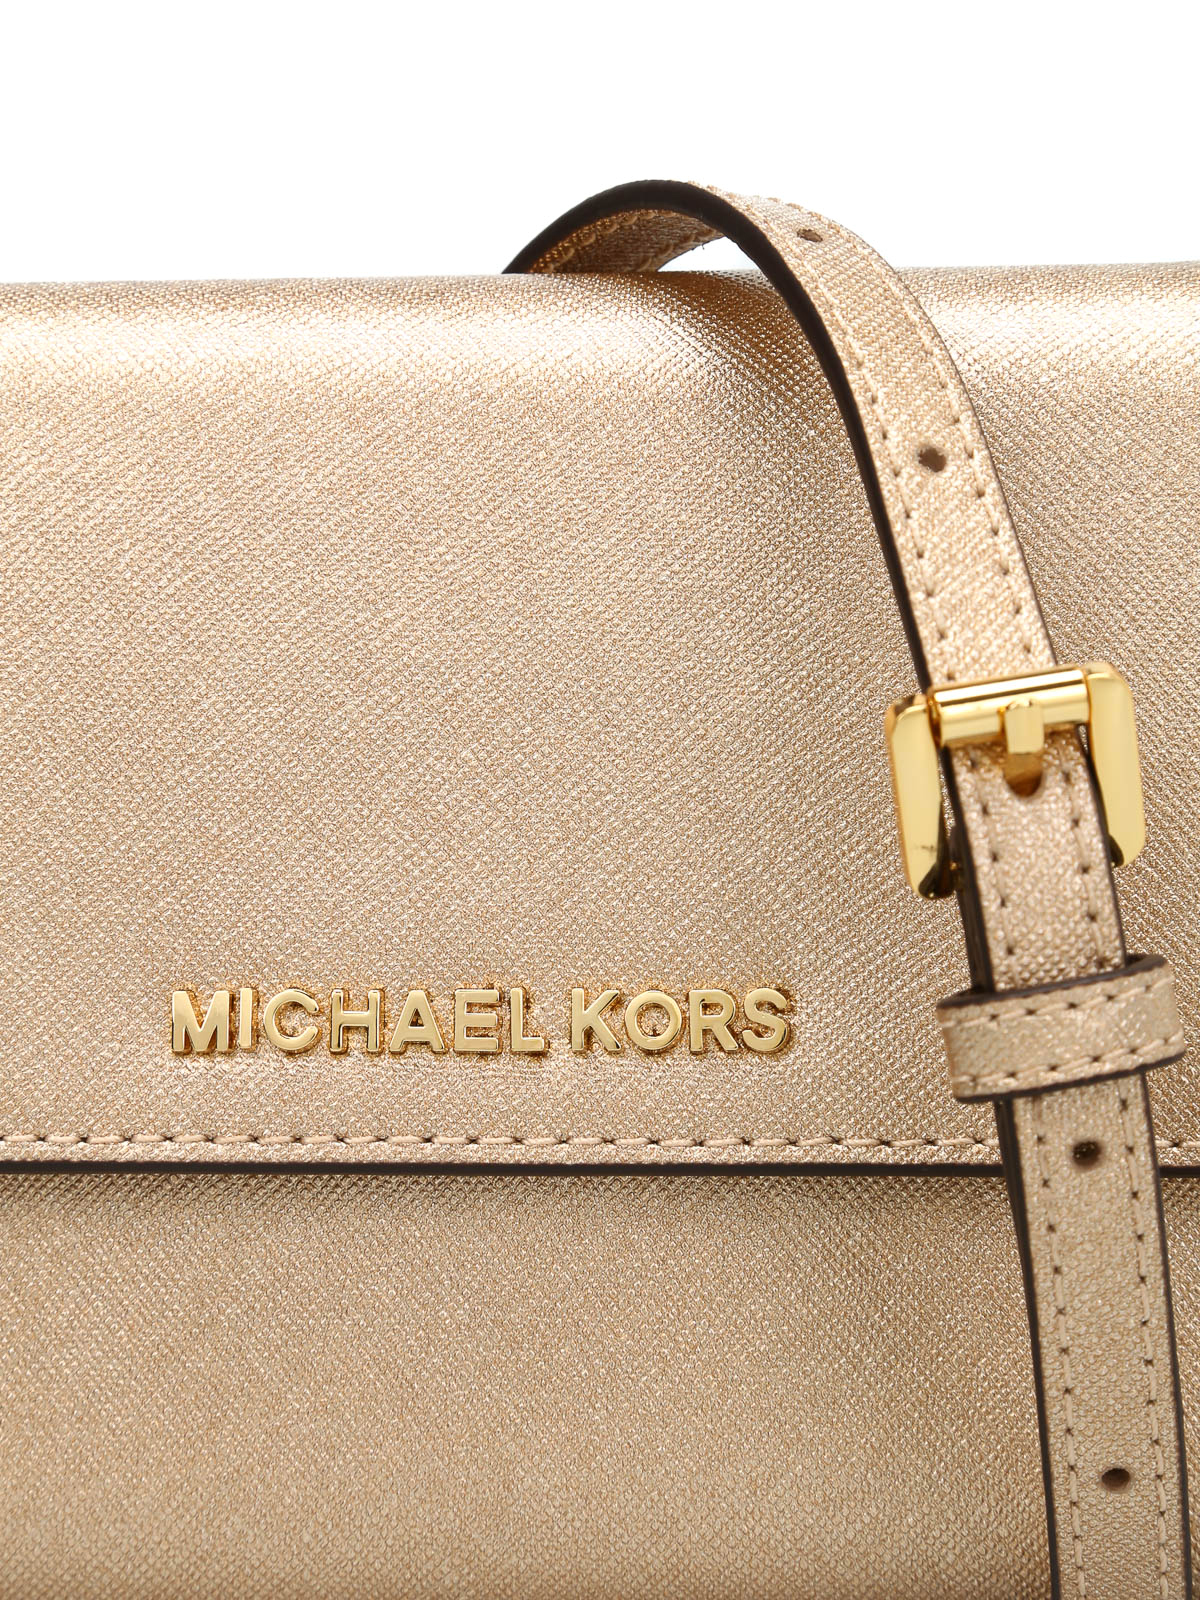 Michael Kors Jet Set Travel Crossbody Bag Pale Gold